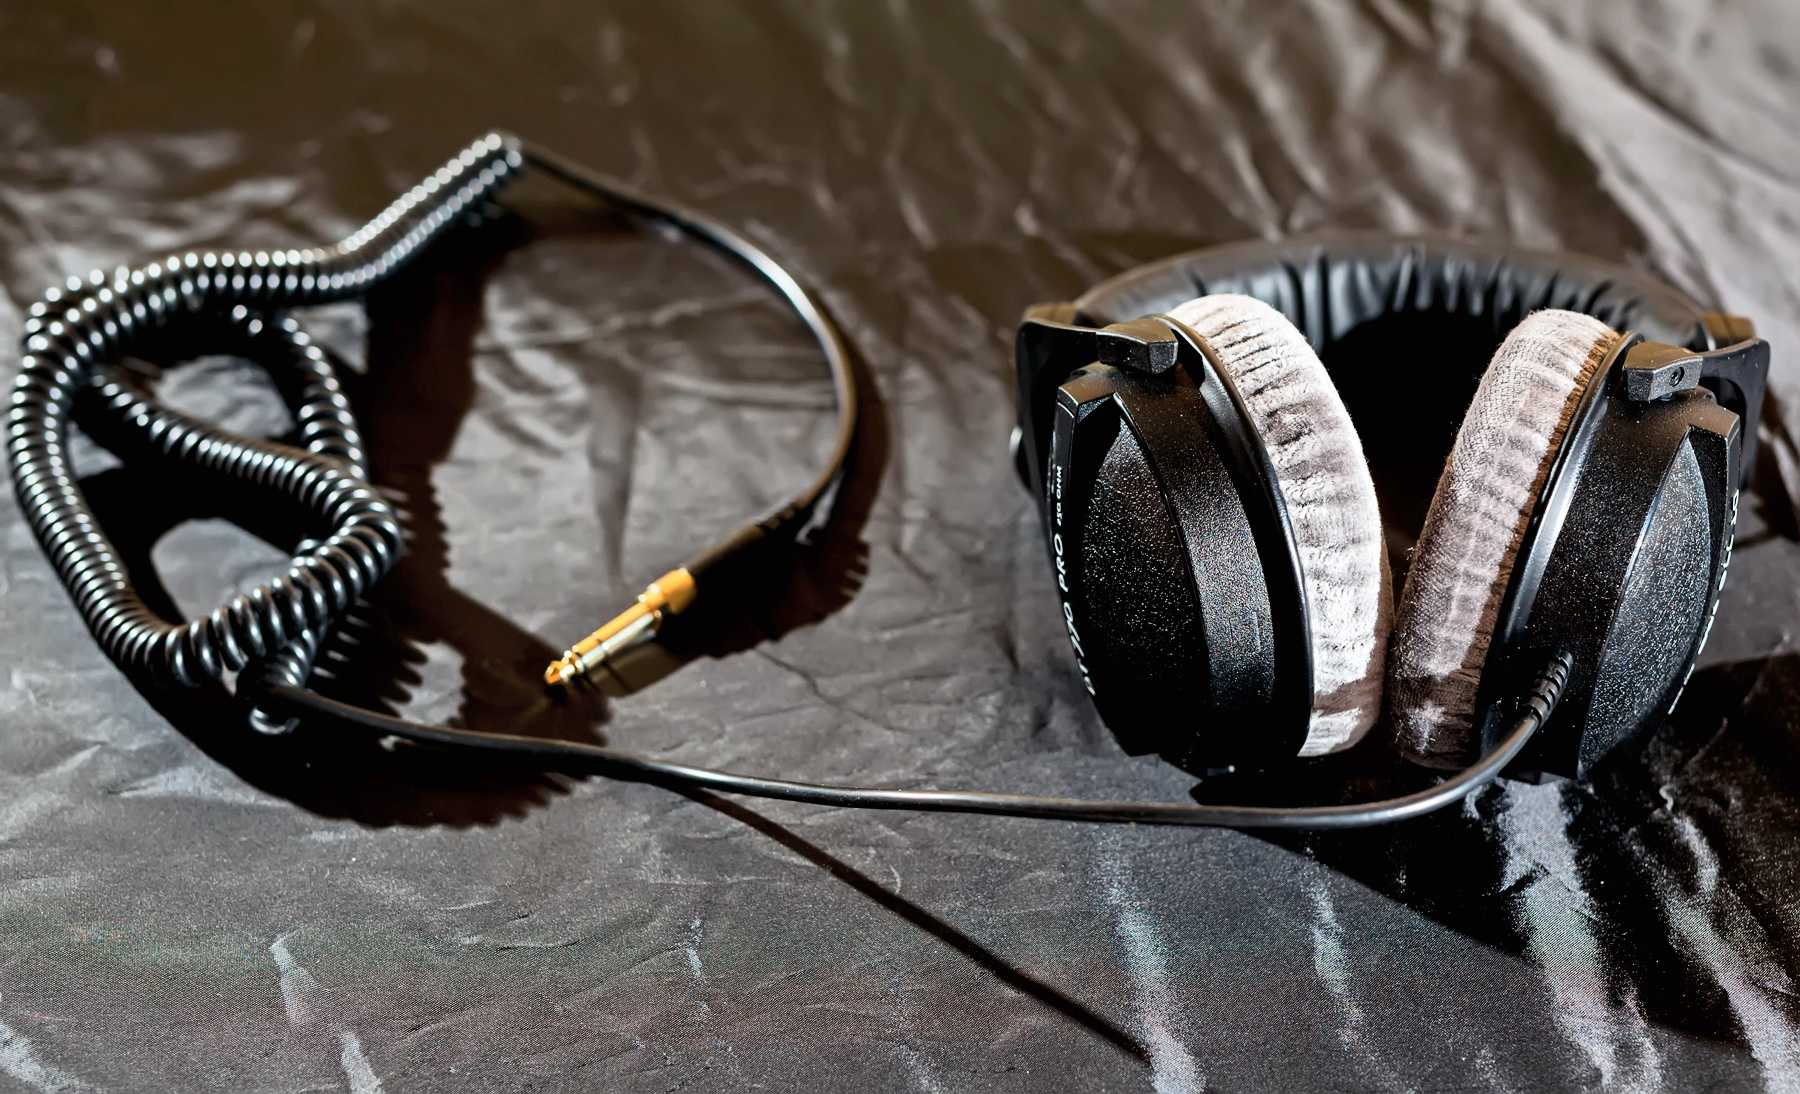 Sennheiser hd 650 vs beyerdynamic dt990 pro: which headphone speaks to you? - soundboxlab